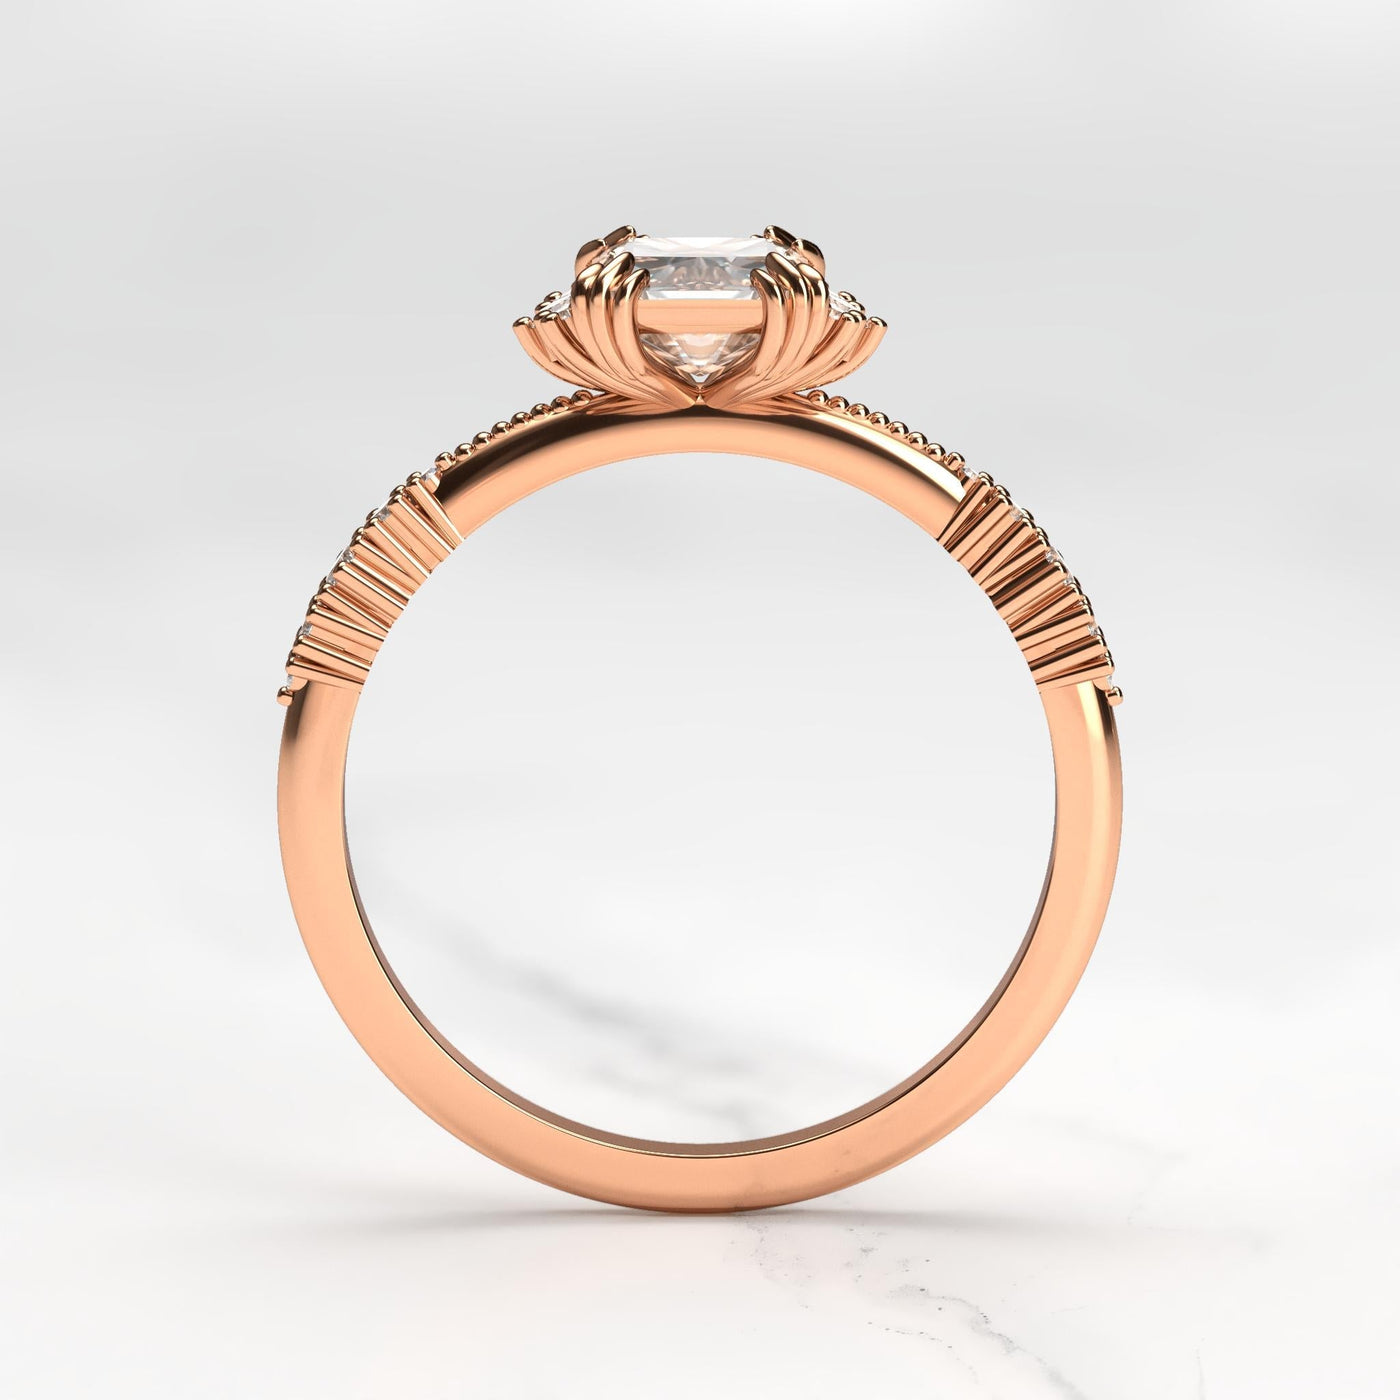 Radiant-cut white diamond cluster ring